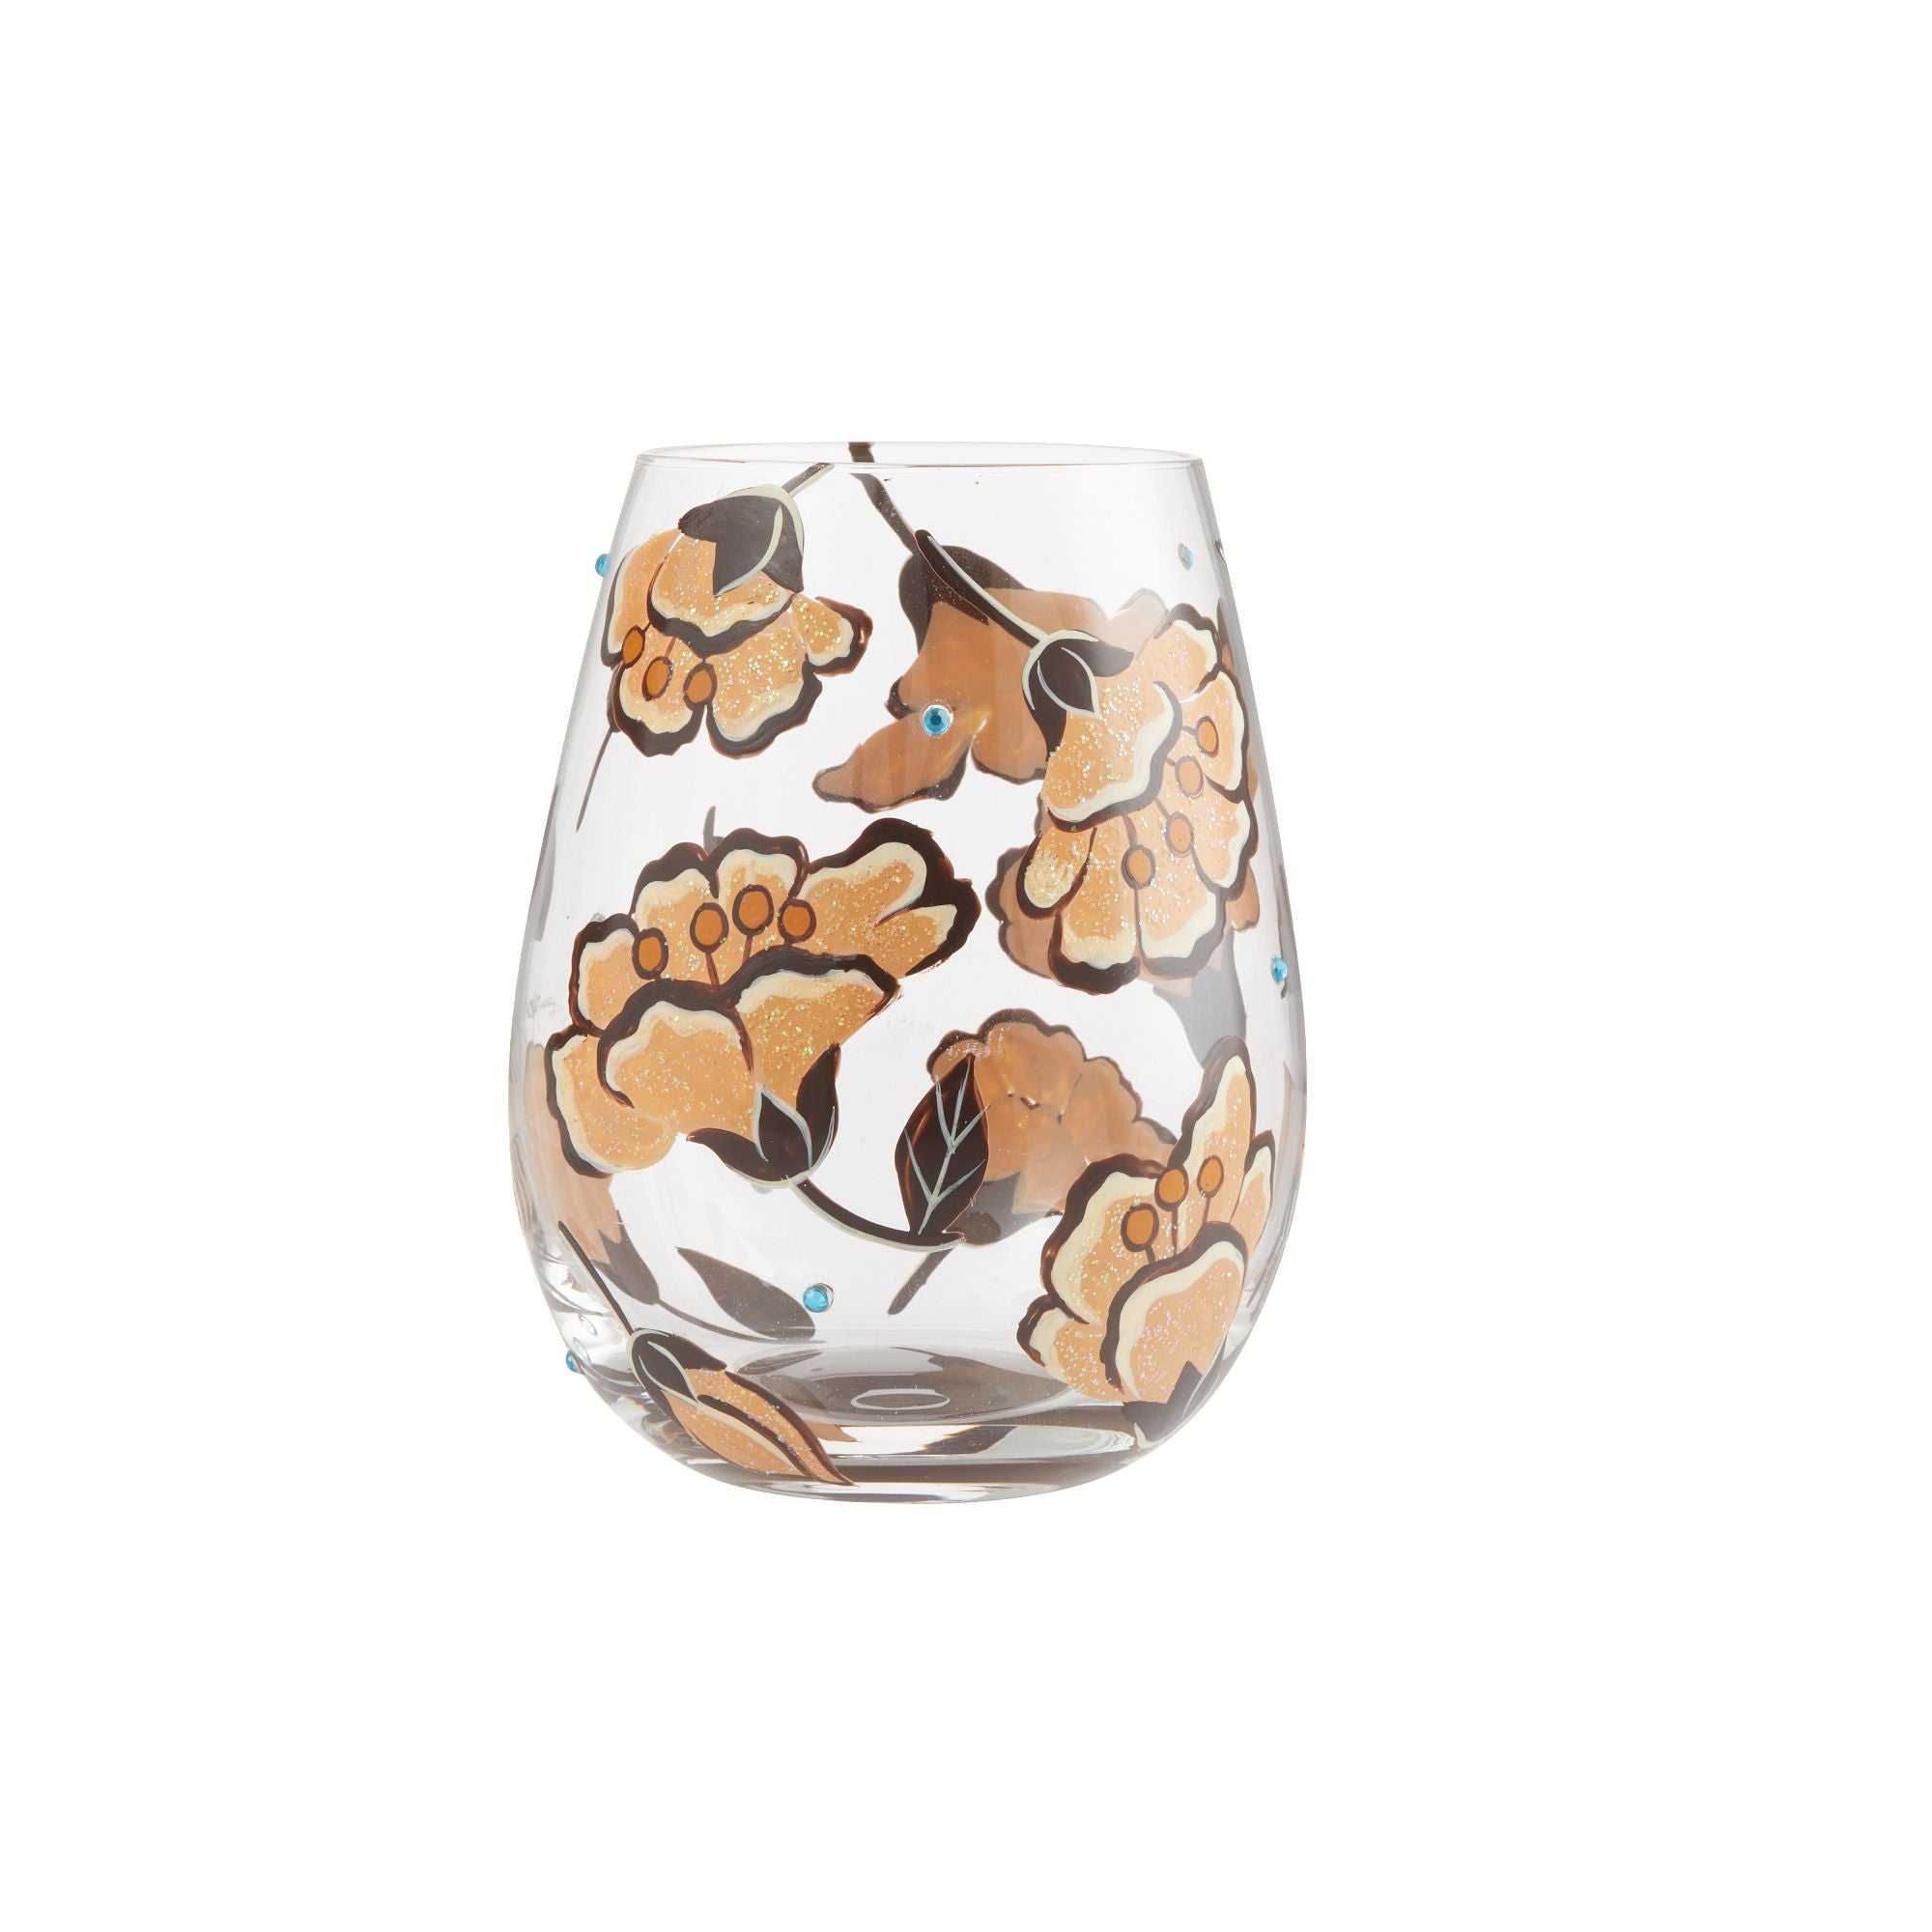 Lolita Jungle Beauty Handpainted Stemless Wine Glass, 20 oz.